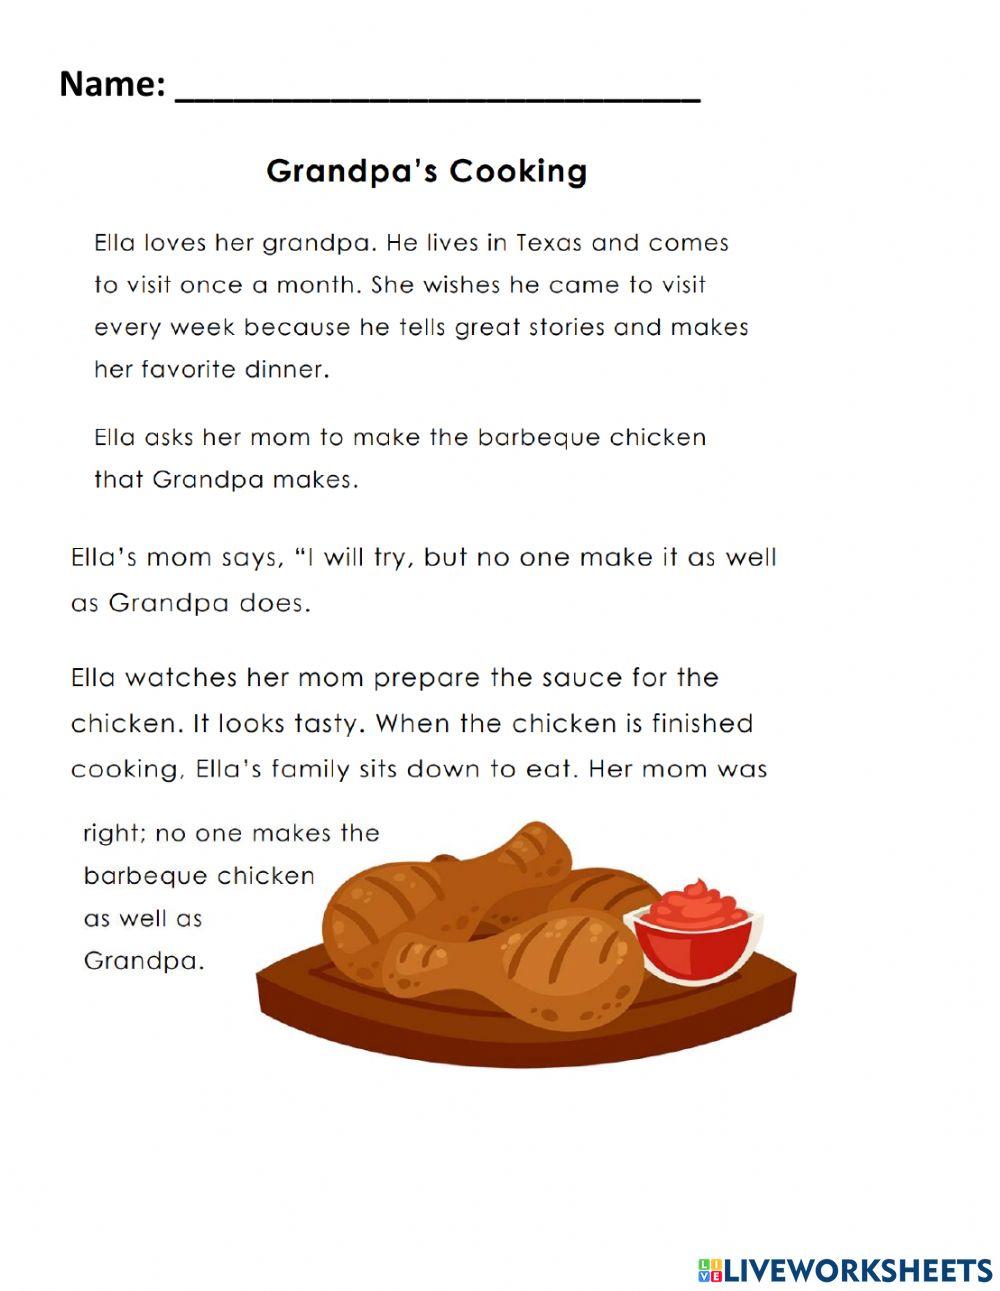 Grandpa's cooking